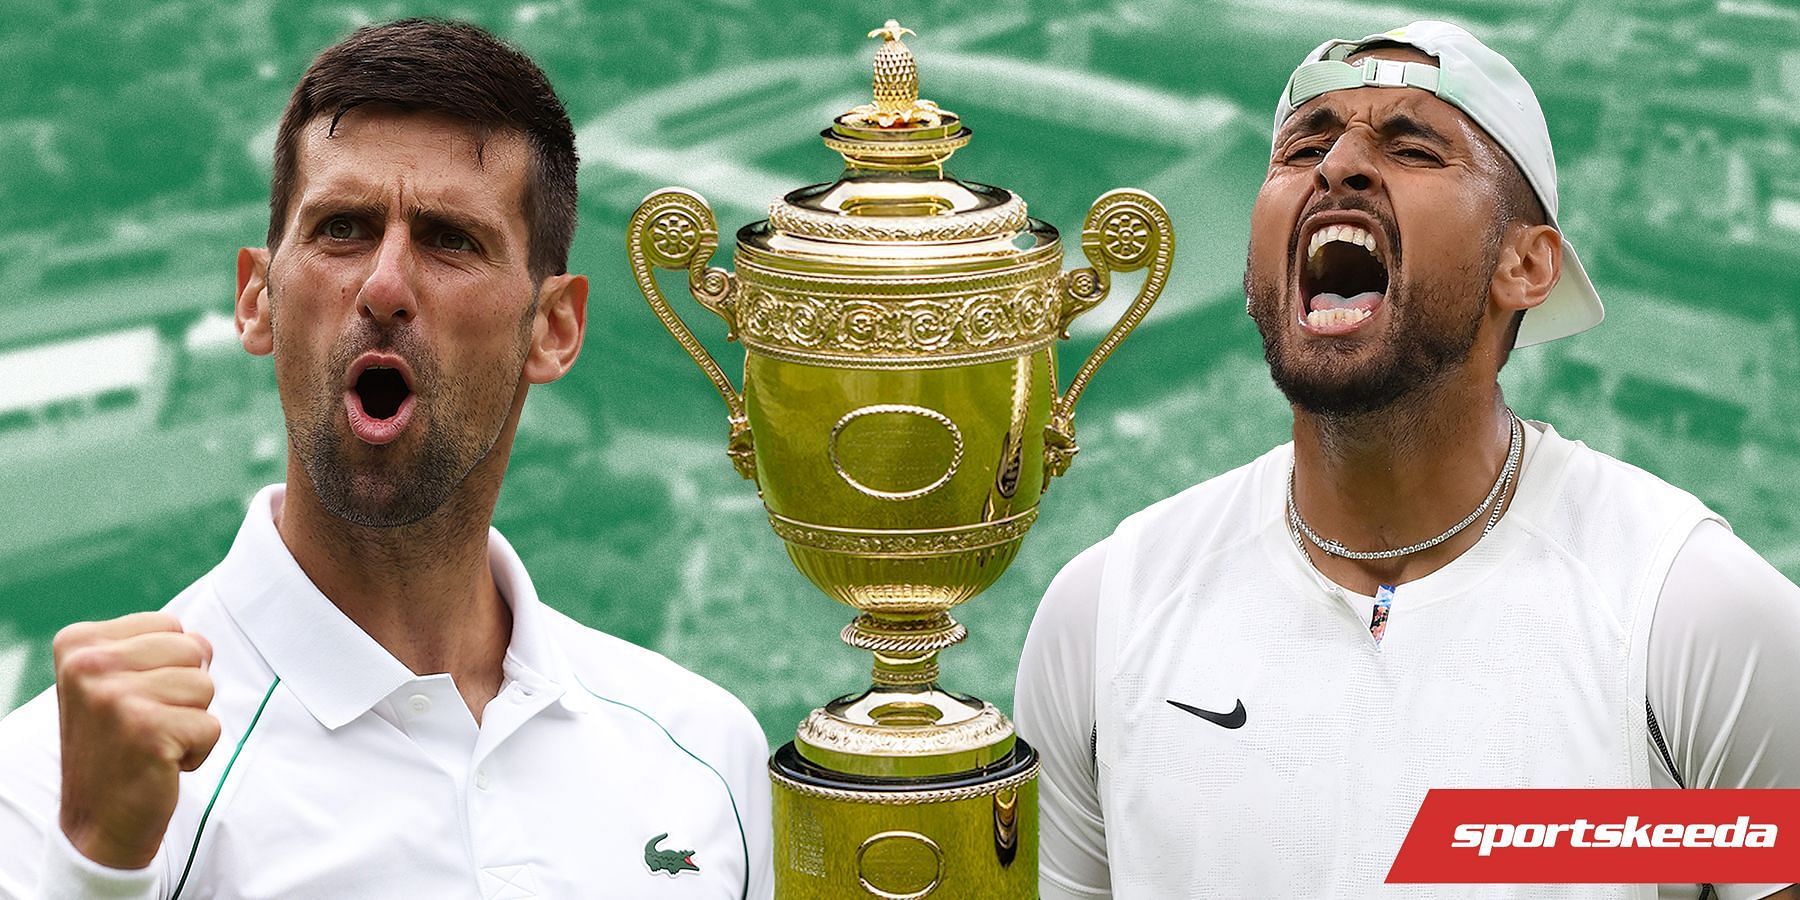 Novak Djokovic will face Nick Kyrgios in the Wimbledon final on Sunday